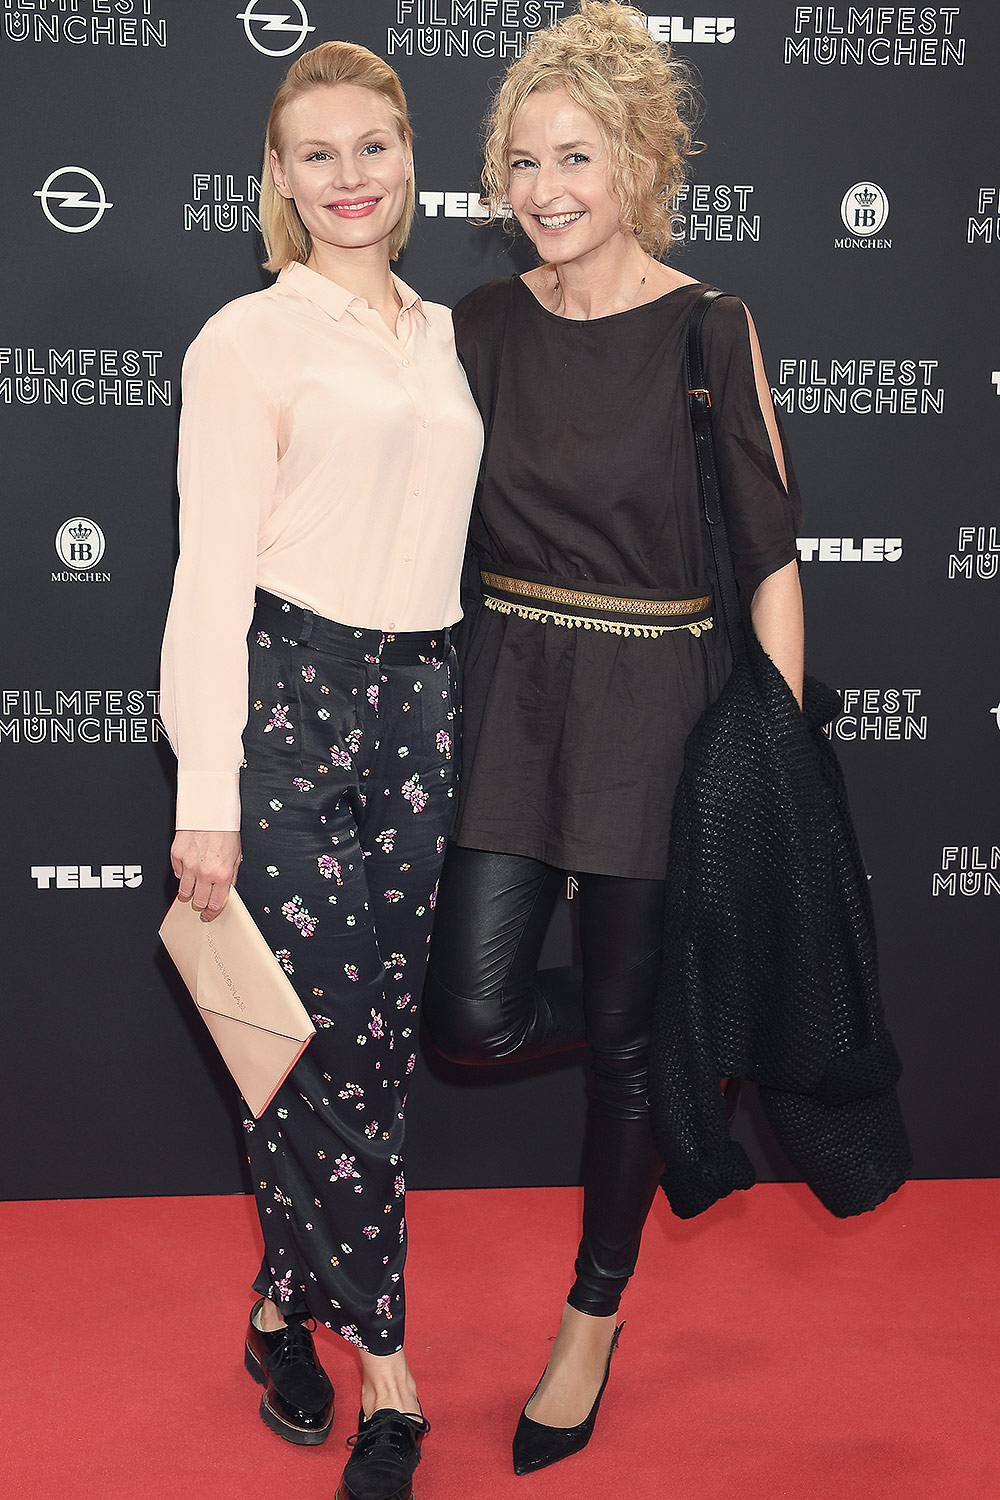 Rosalie Thomass & Franziska Schlattner attend the premiere